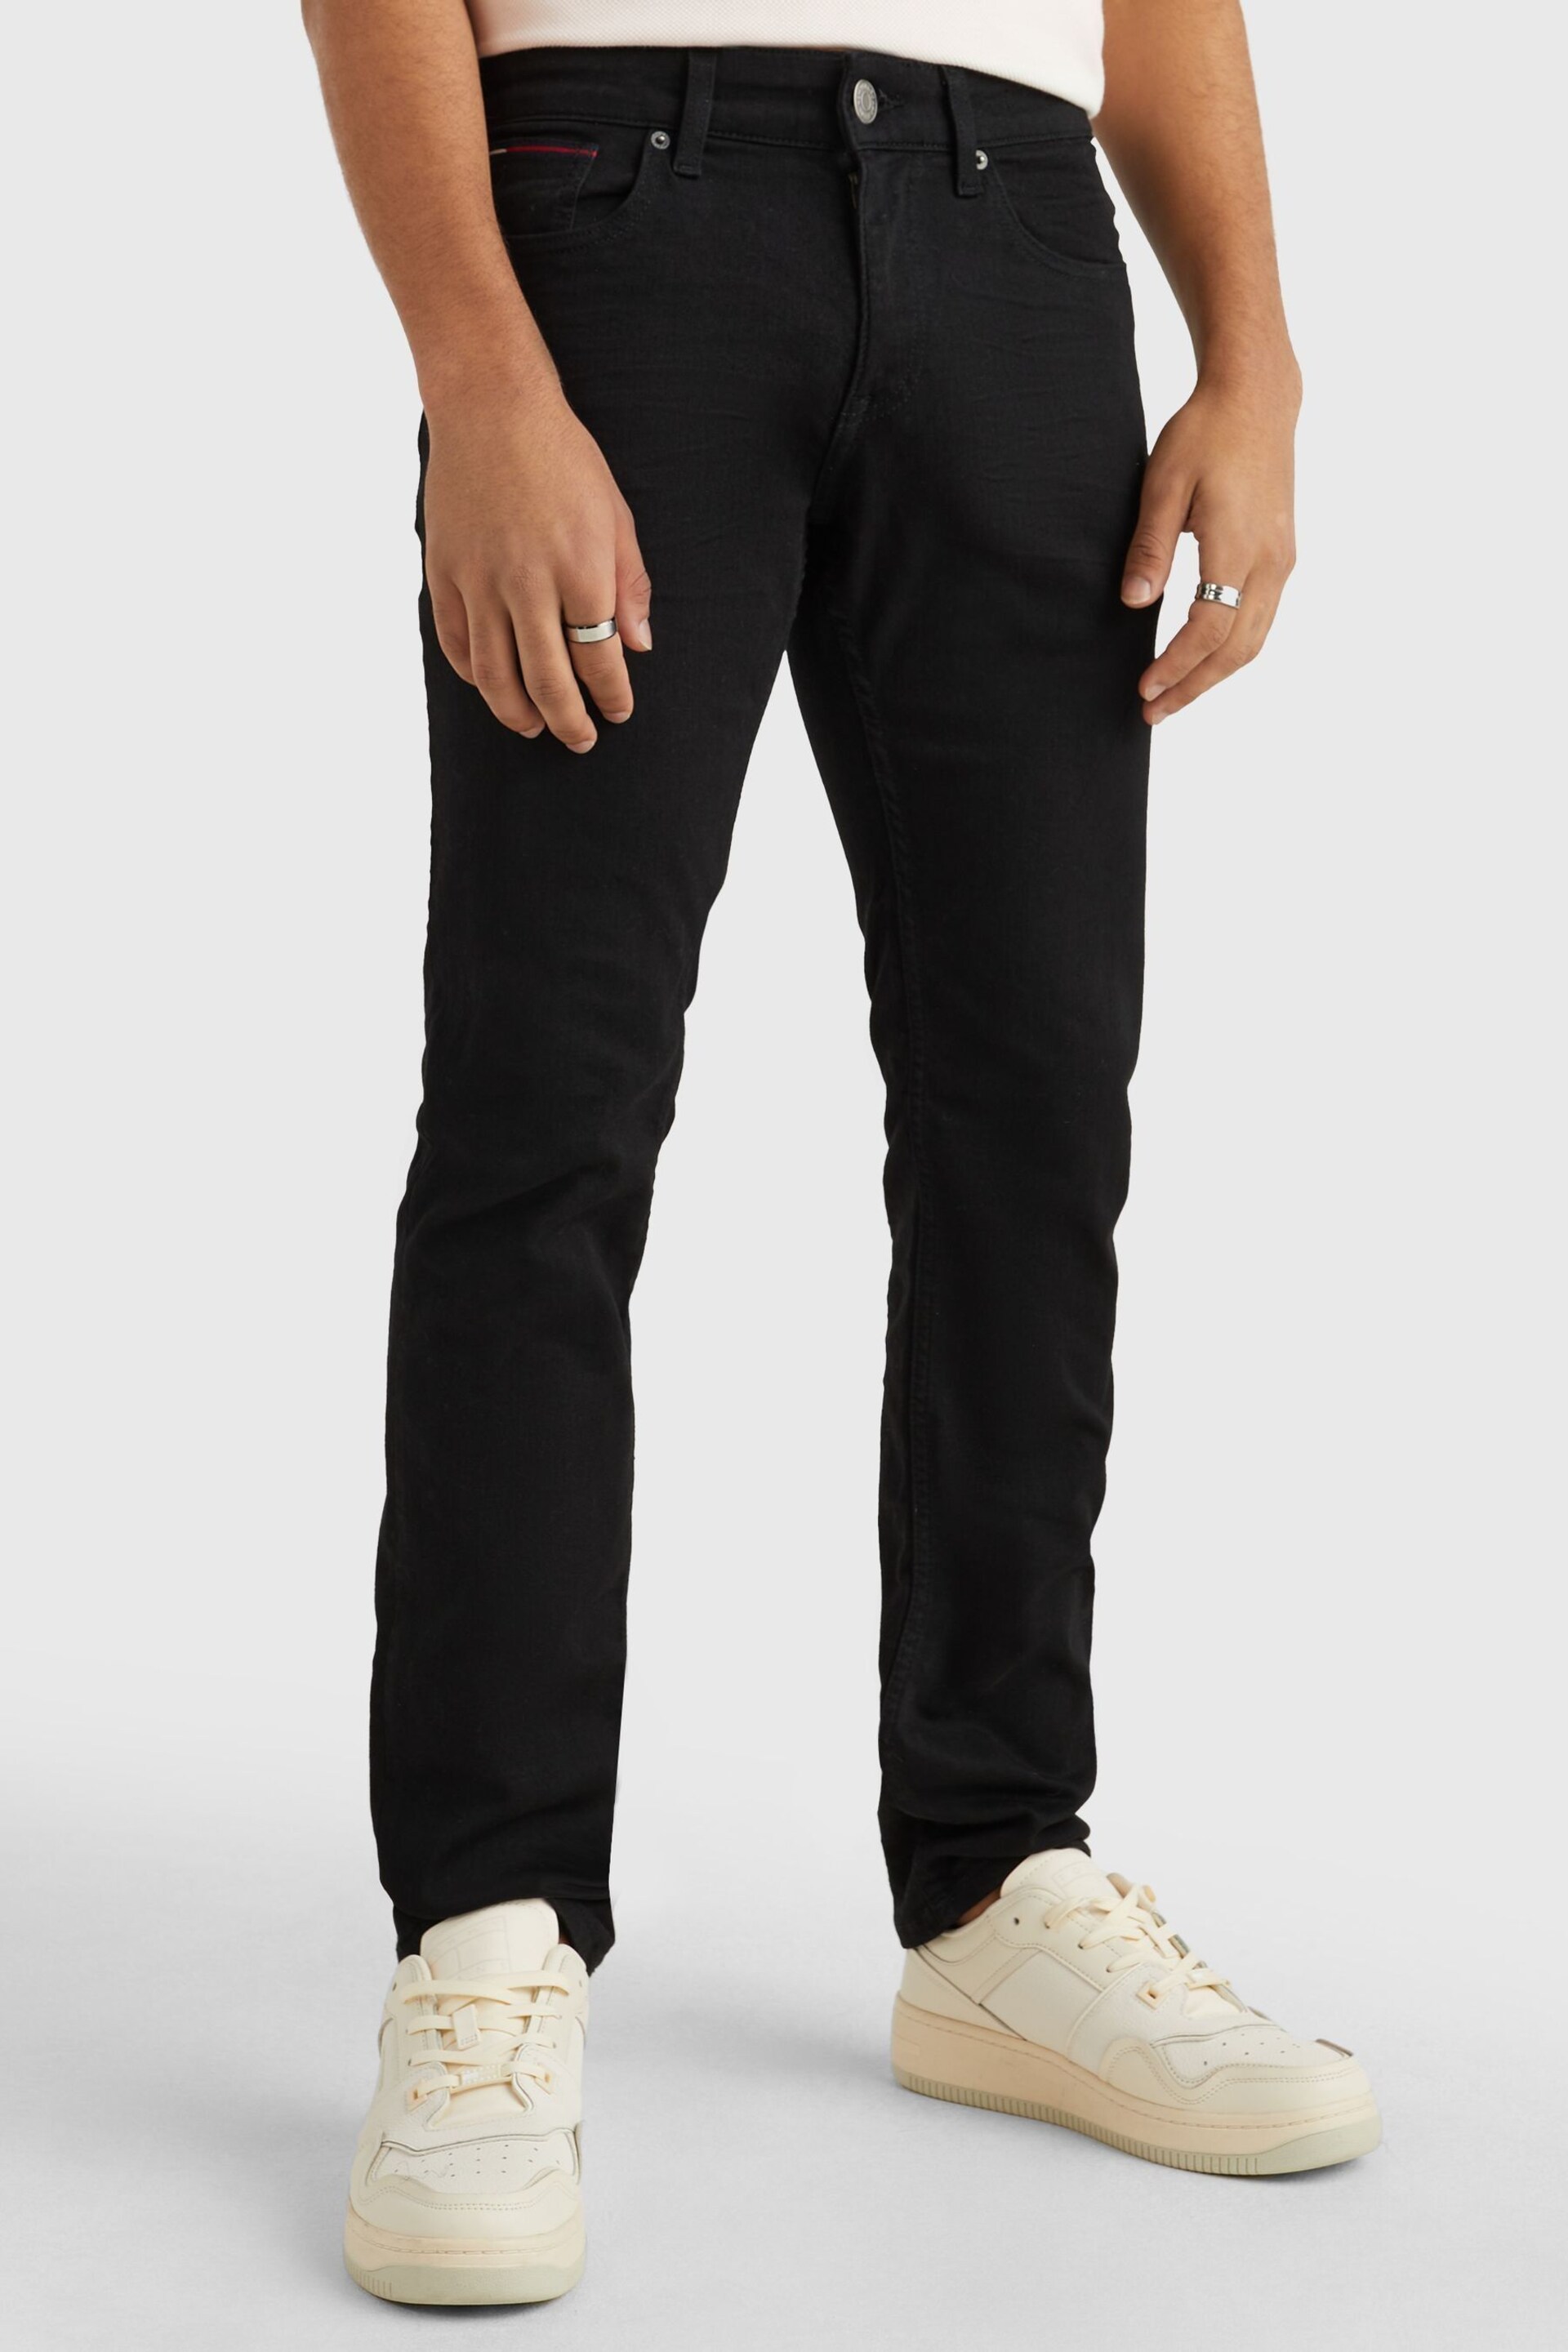 Tommy Jeans Scanton Slim Fit Black Jeans - Image 1 of 4